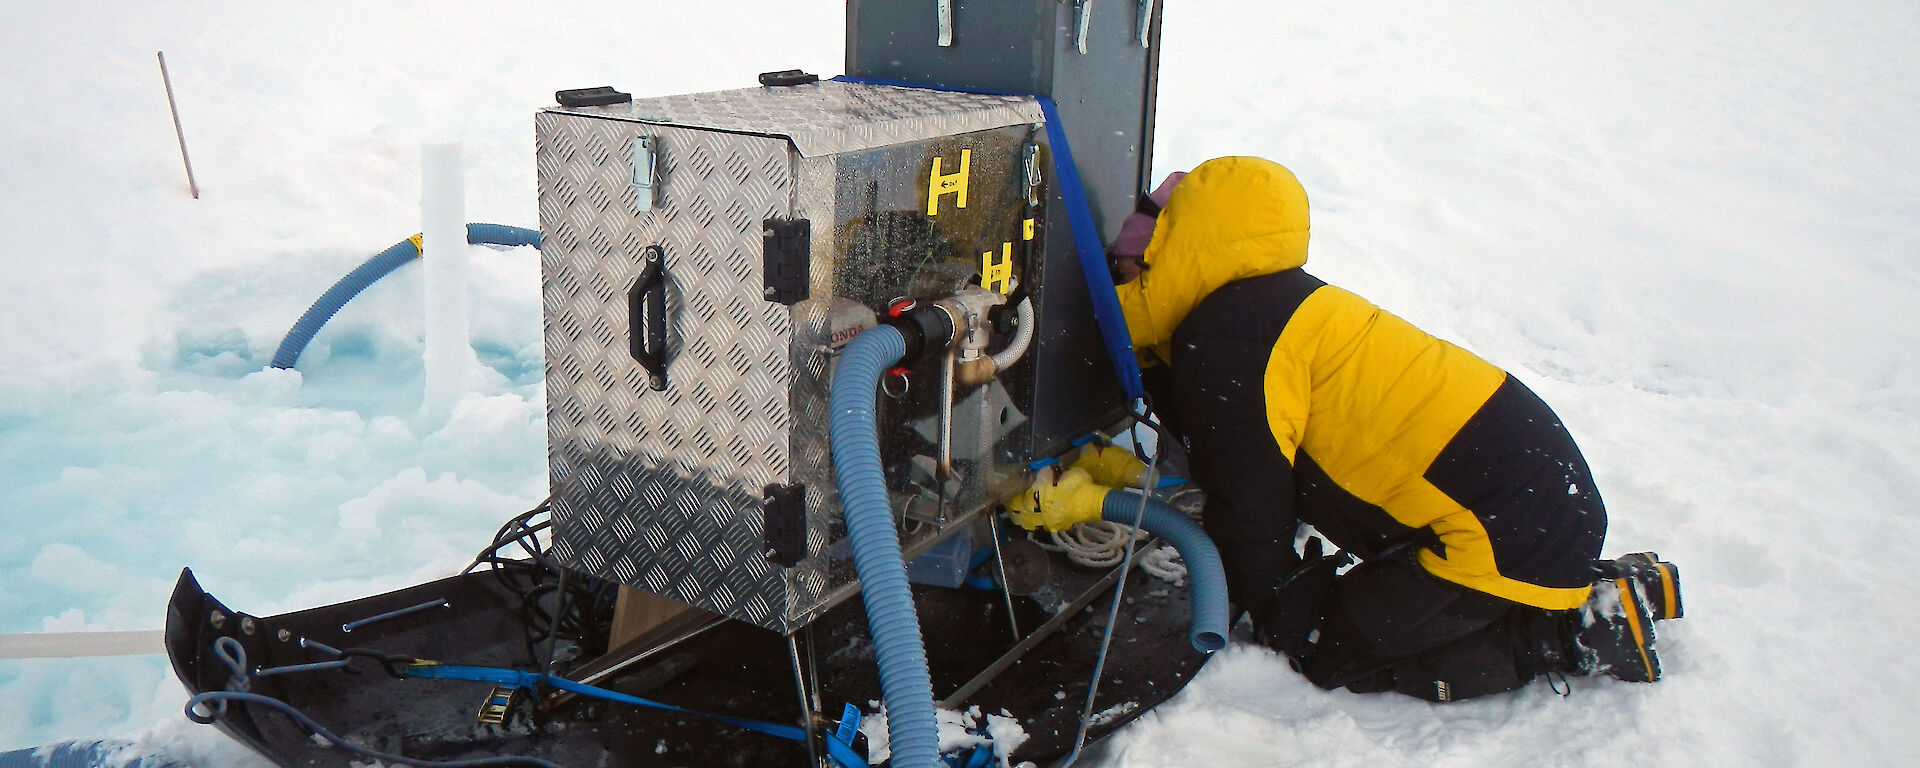 The sled-based krill pump used on sea ice floes.